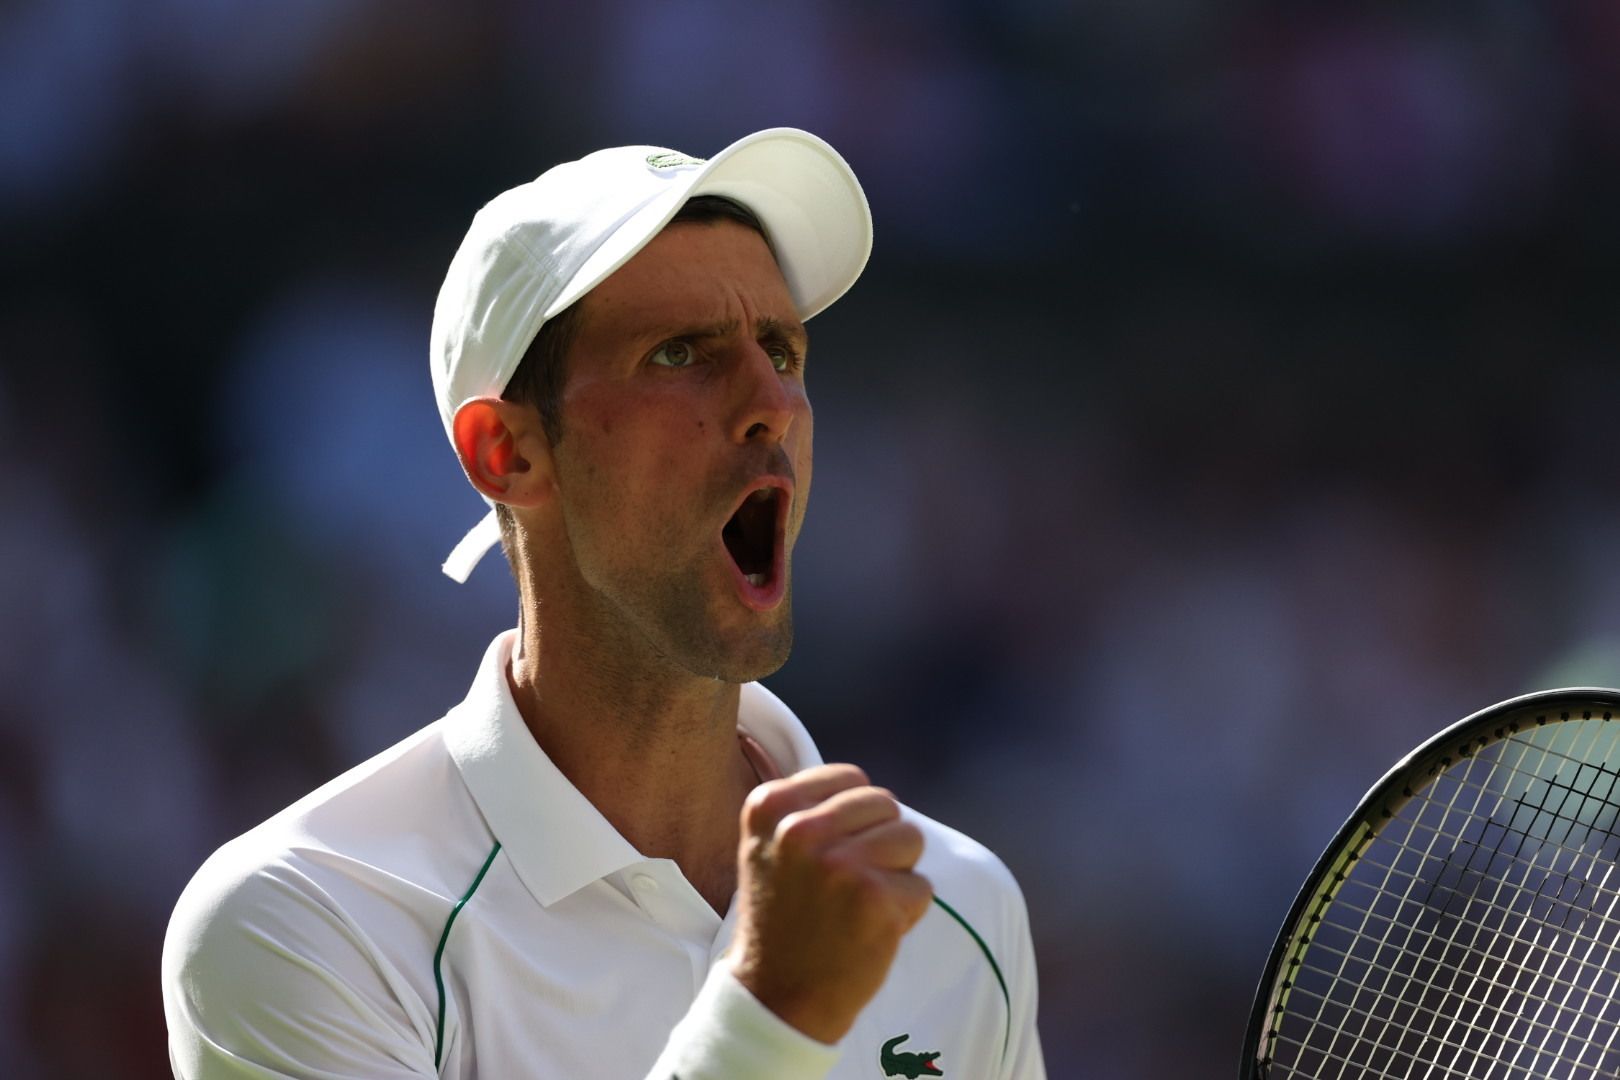 Novak Djokovics road to the Wimbledon 2022 title